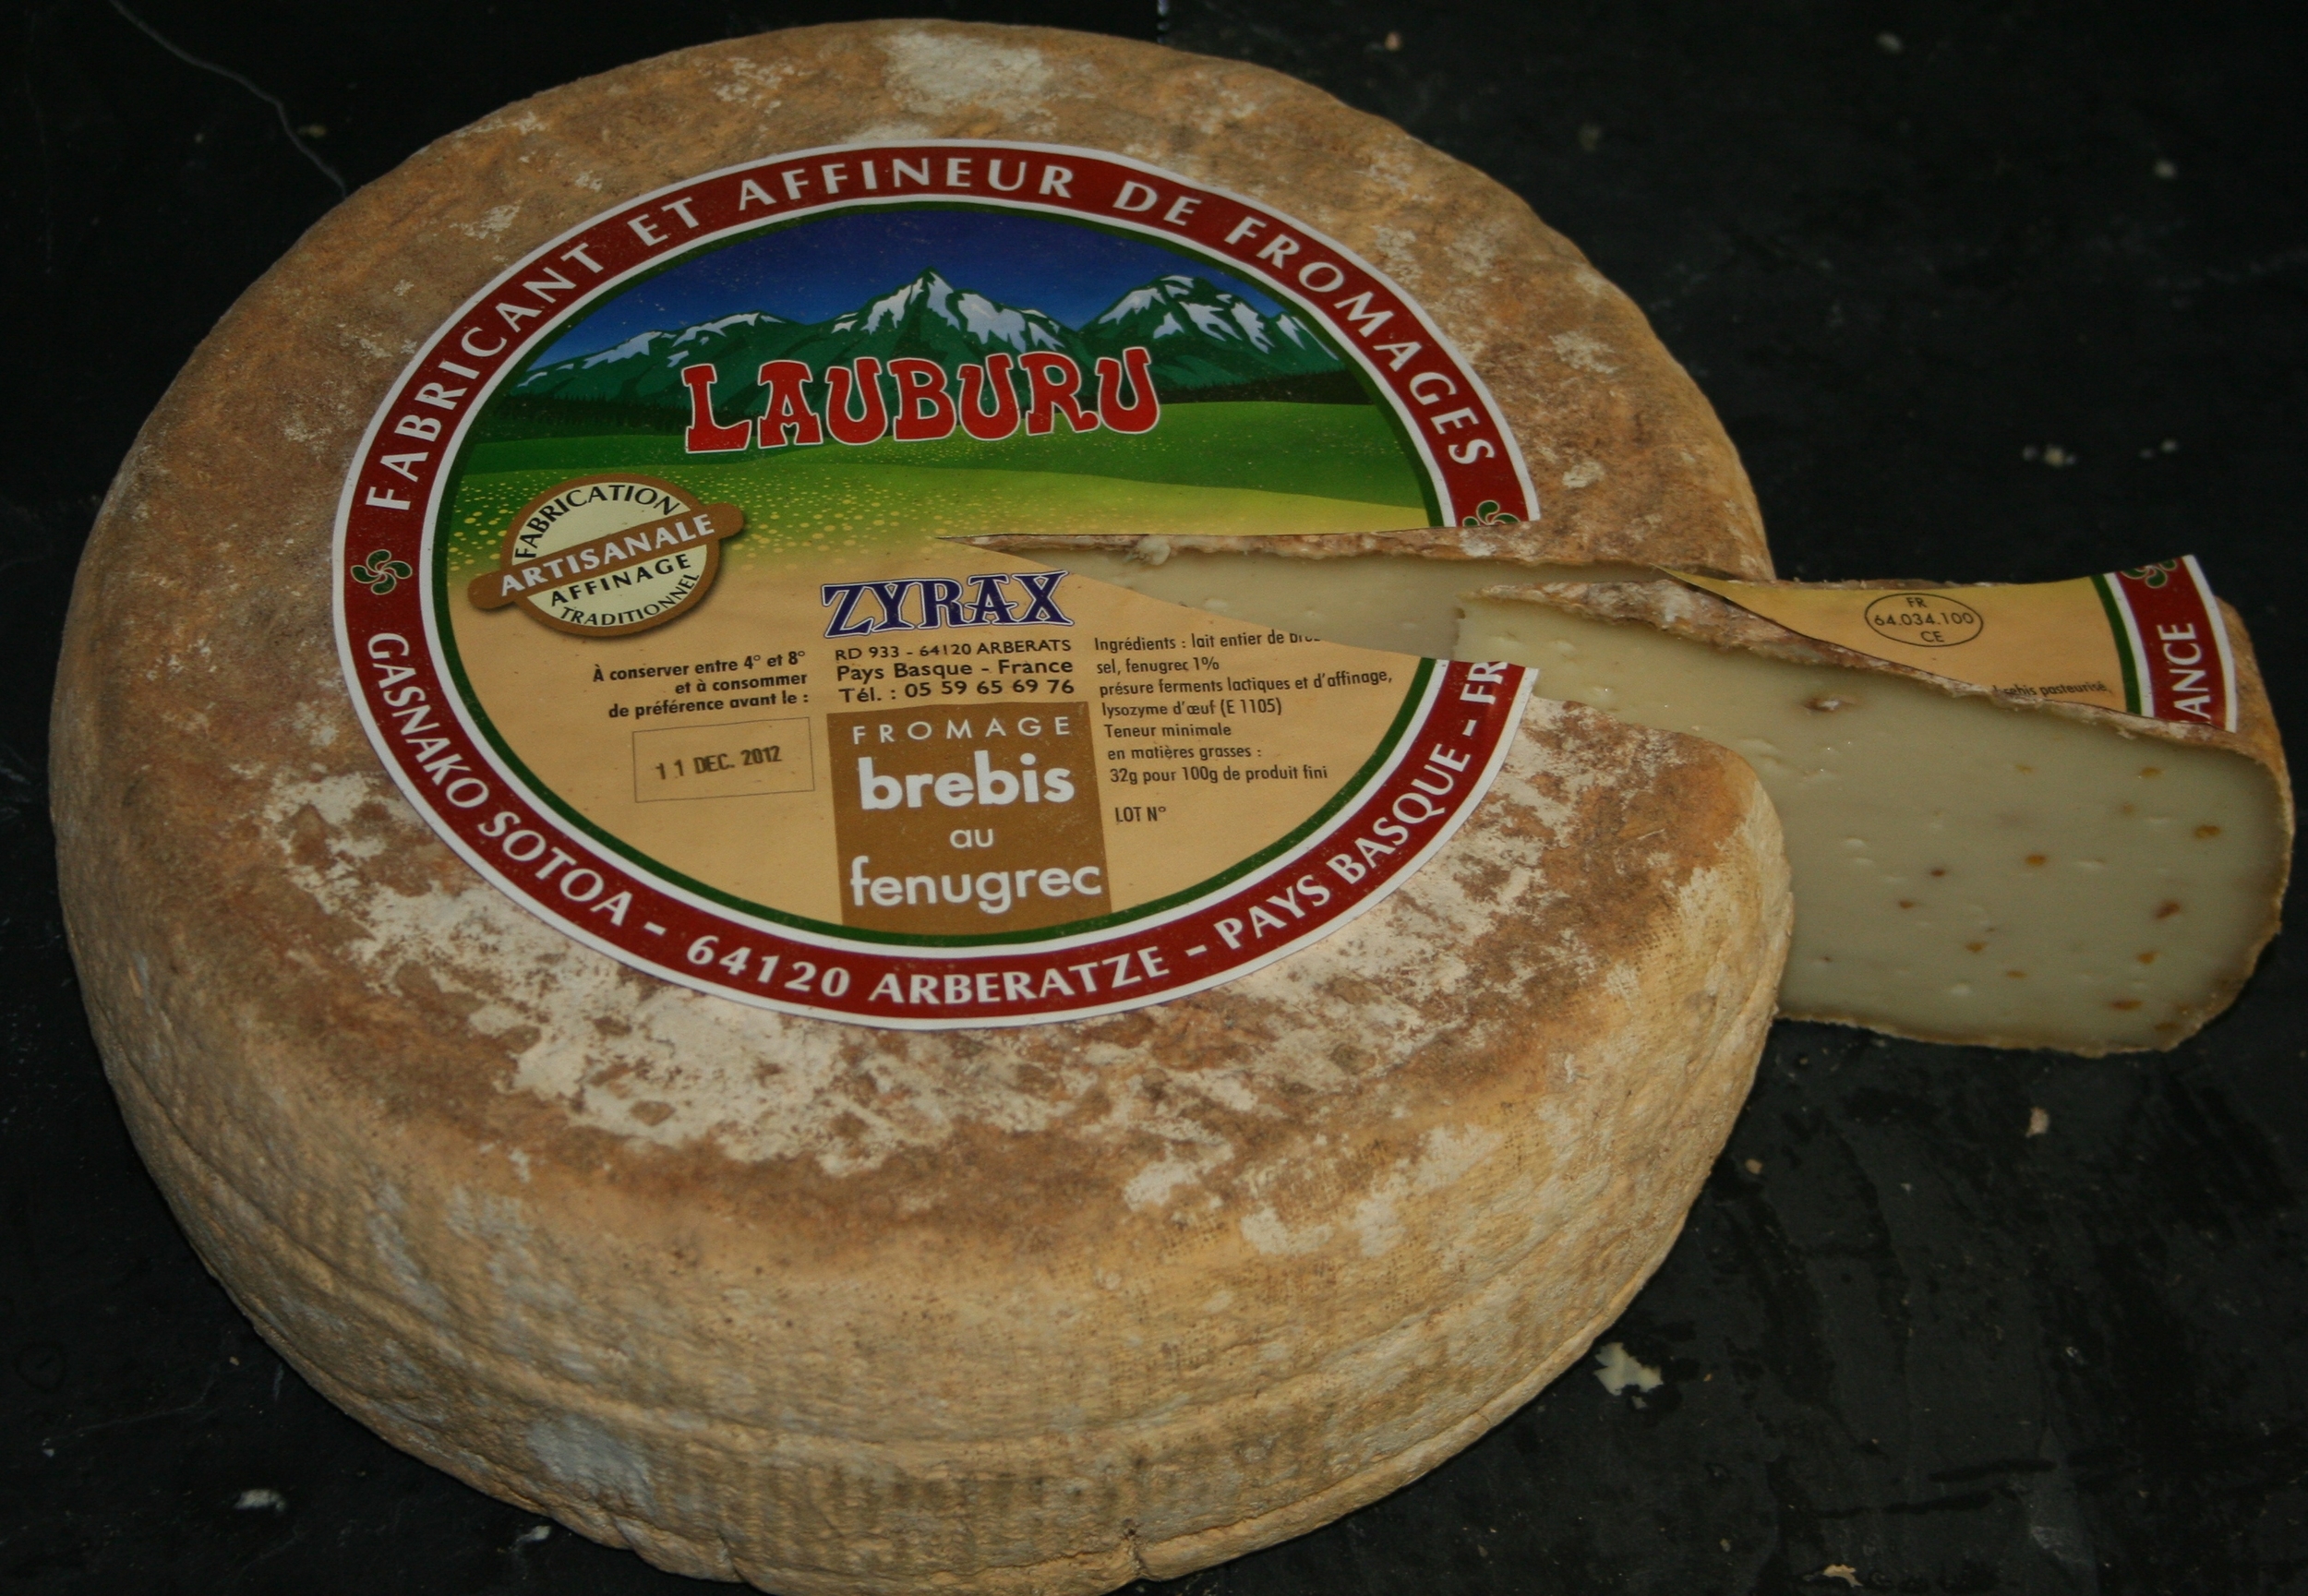 Brebis au Fenugrec2-zyrax fromage-www.luxfood-shop.fr